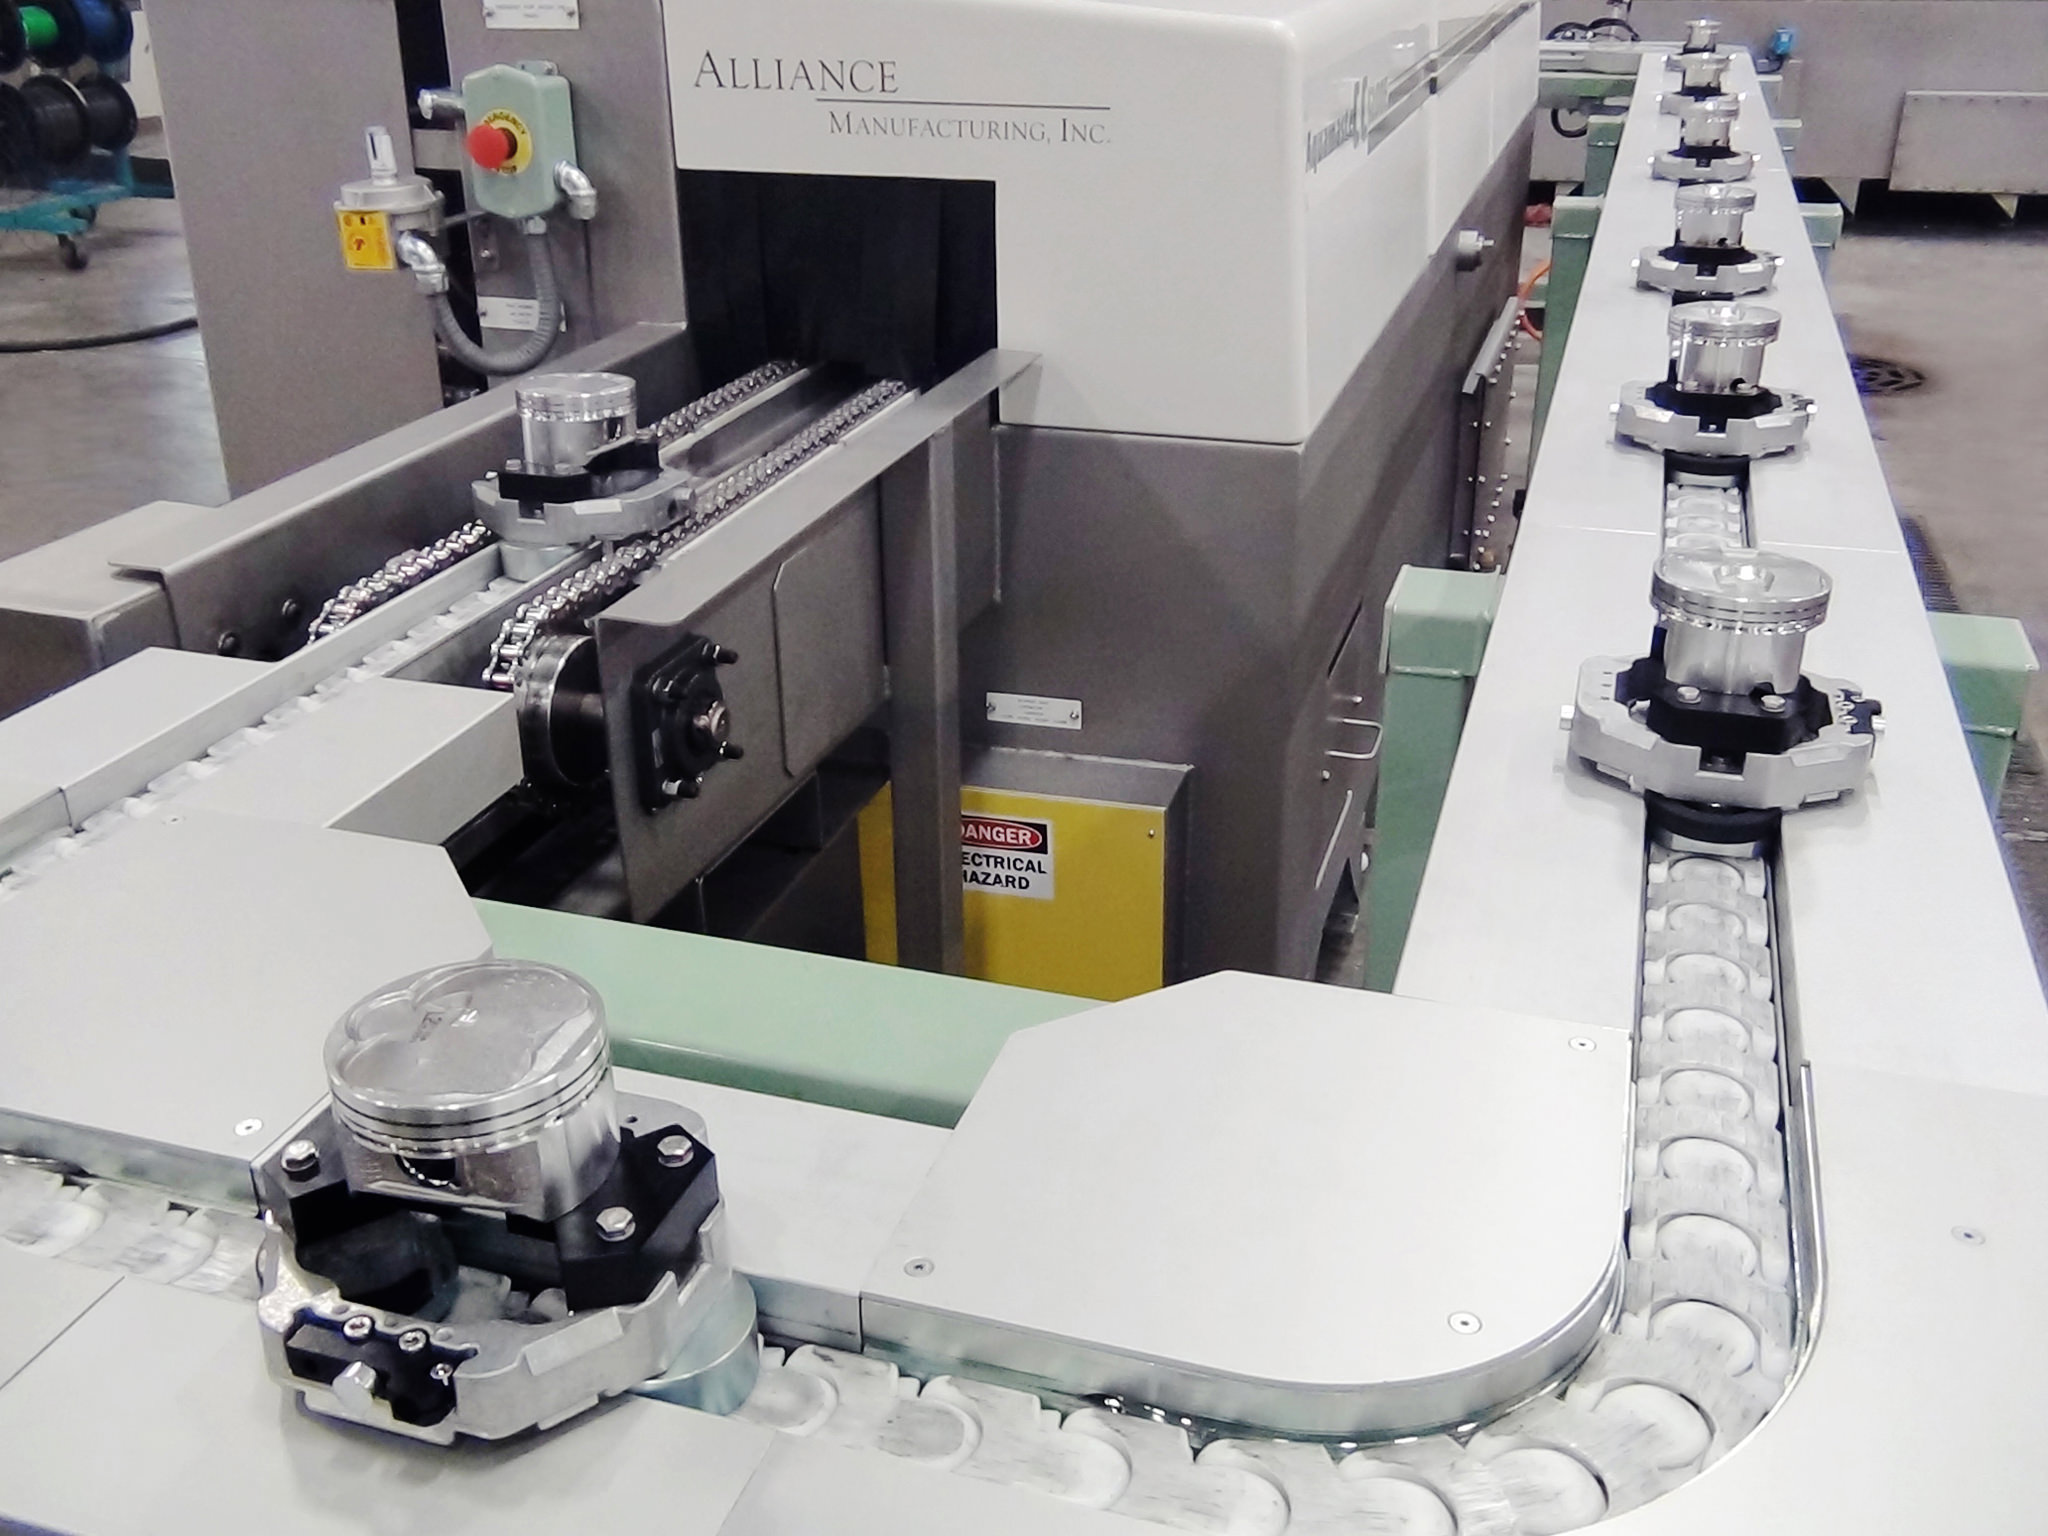 Piston manufacturing return to operator washer